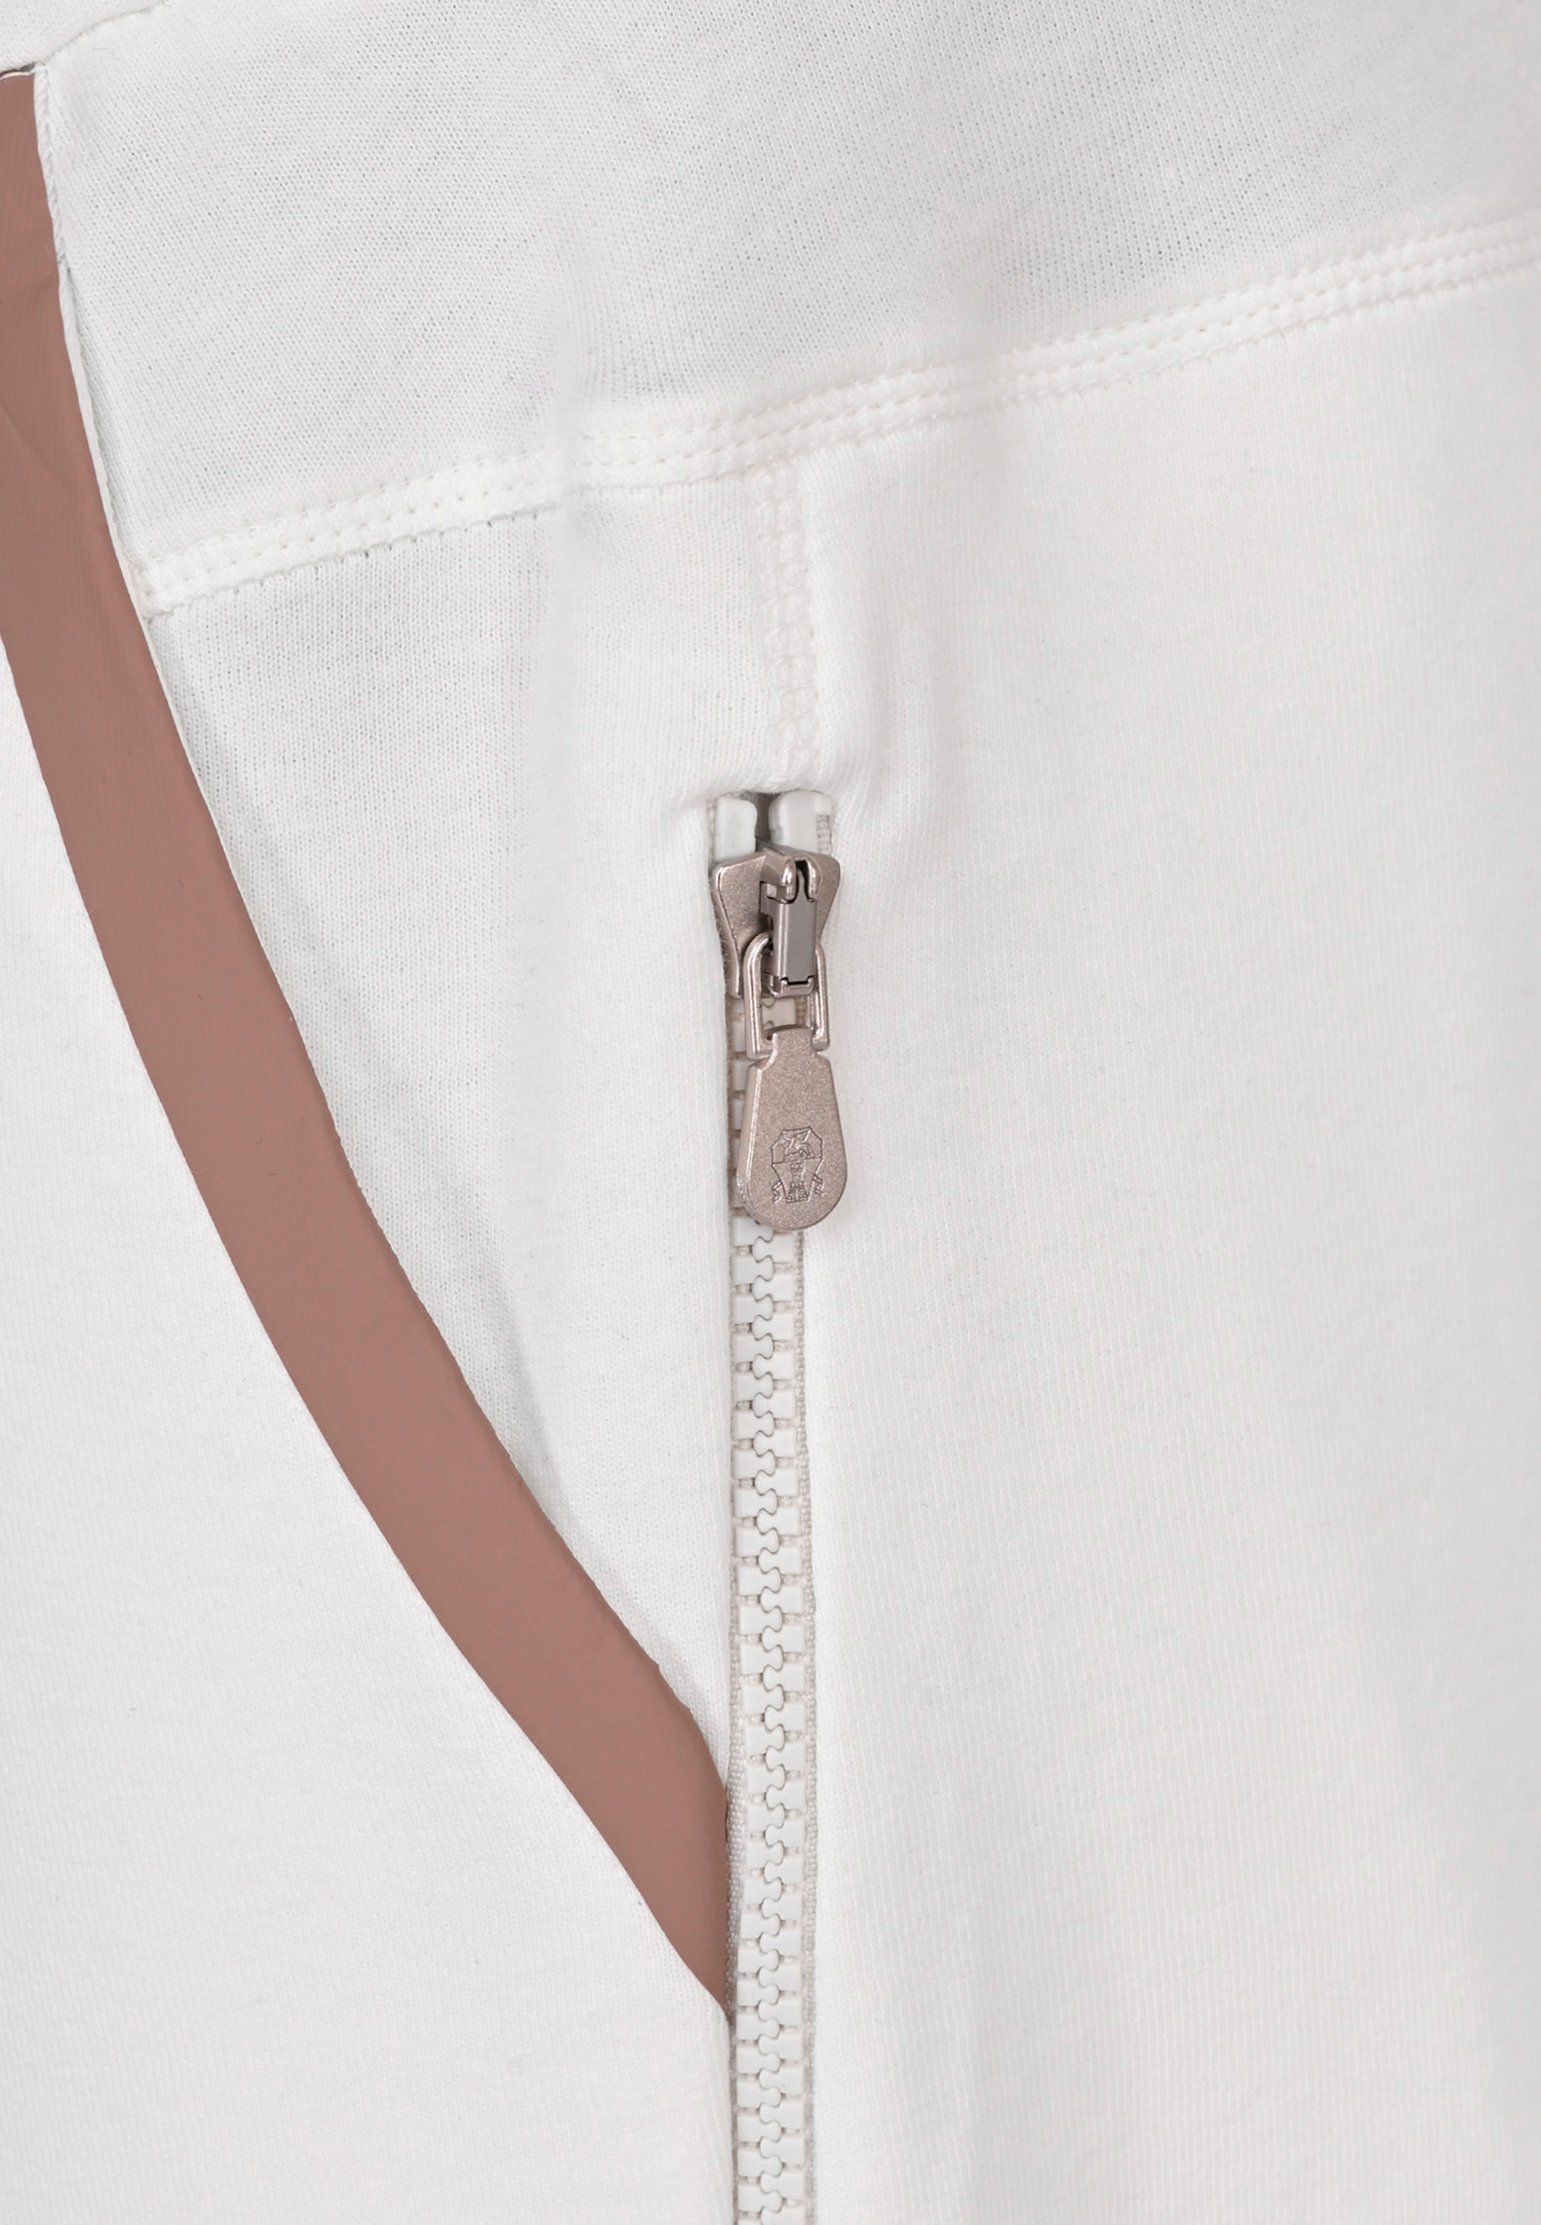 Pants BRUNELLO CUCINELLI Color: white (Code: 210) in online store Allure